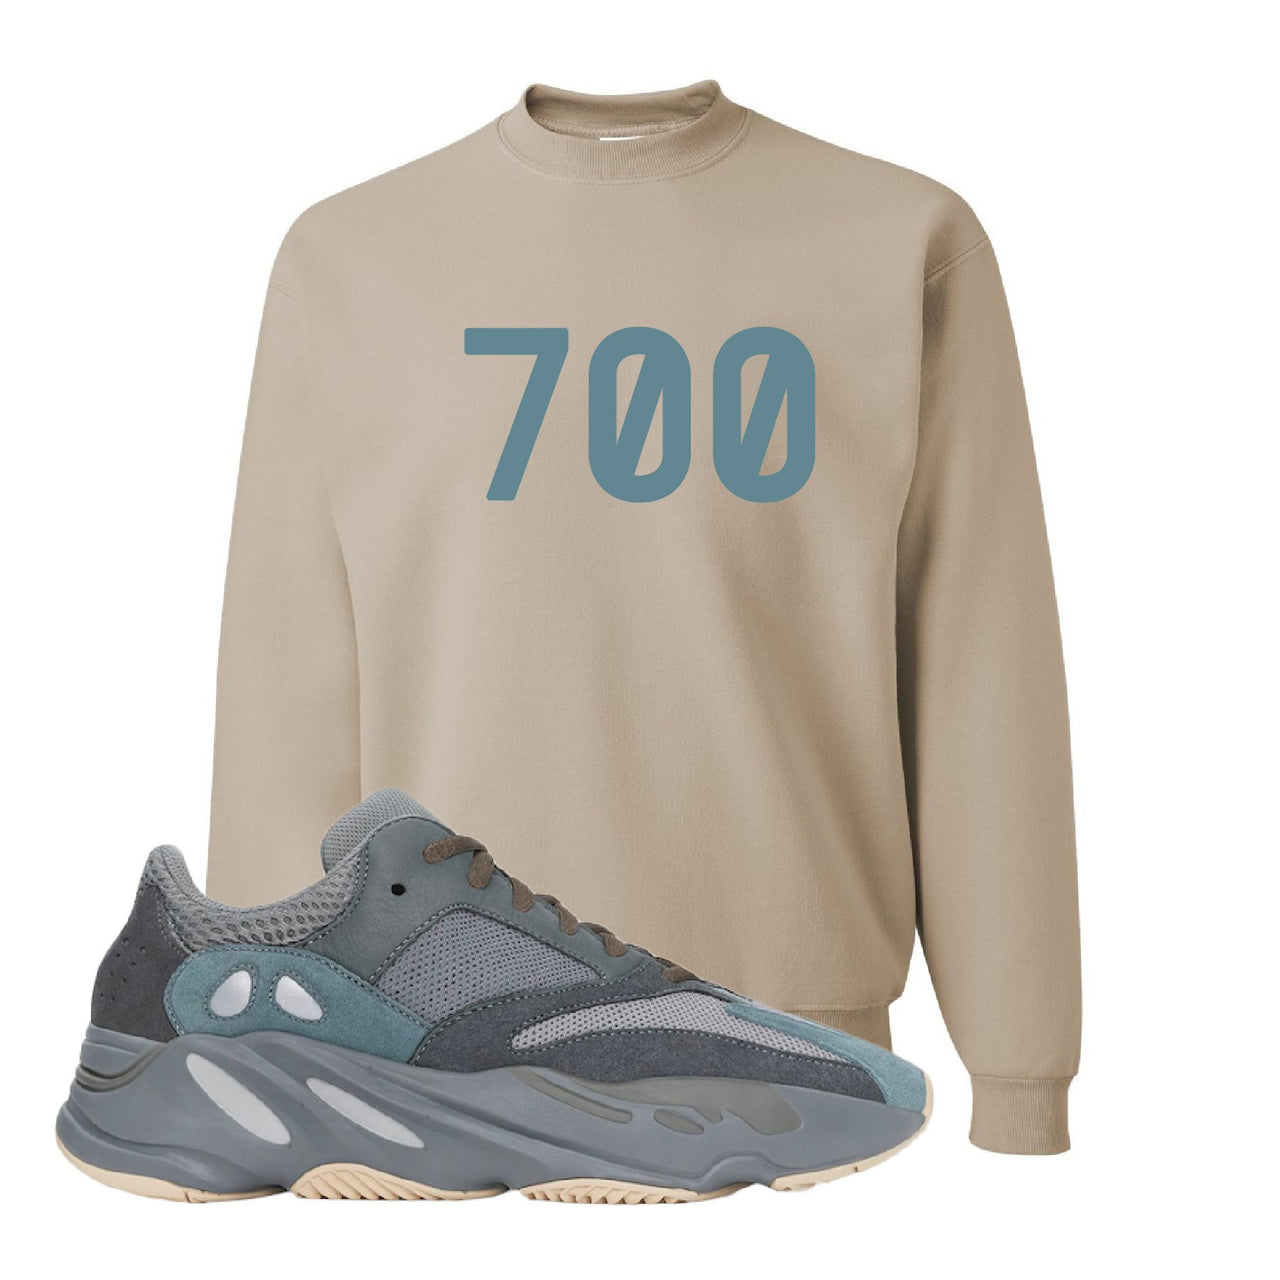 Yeezy Boost 700 Teal Blue 700 Sandstone Sneaker Hook Up Crewneck Sweatshirt